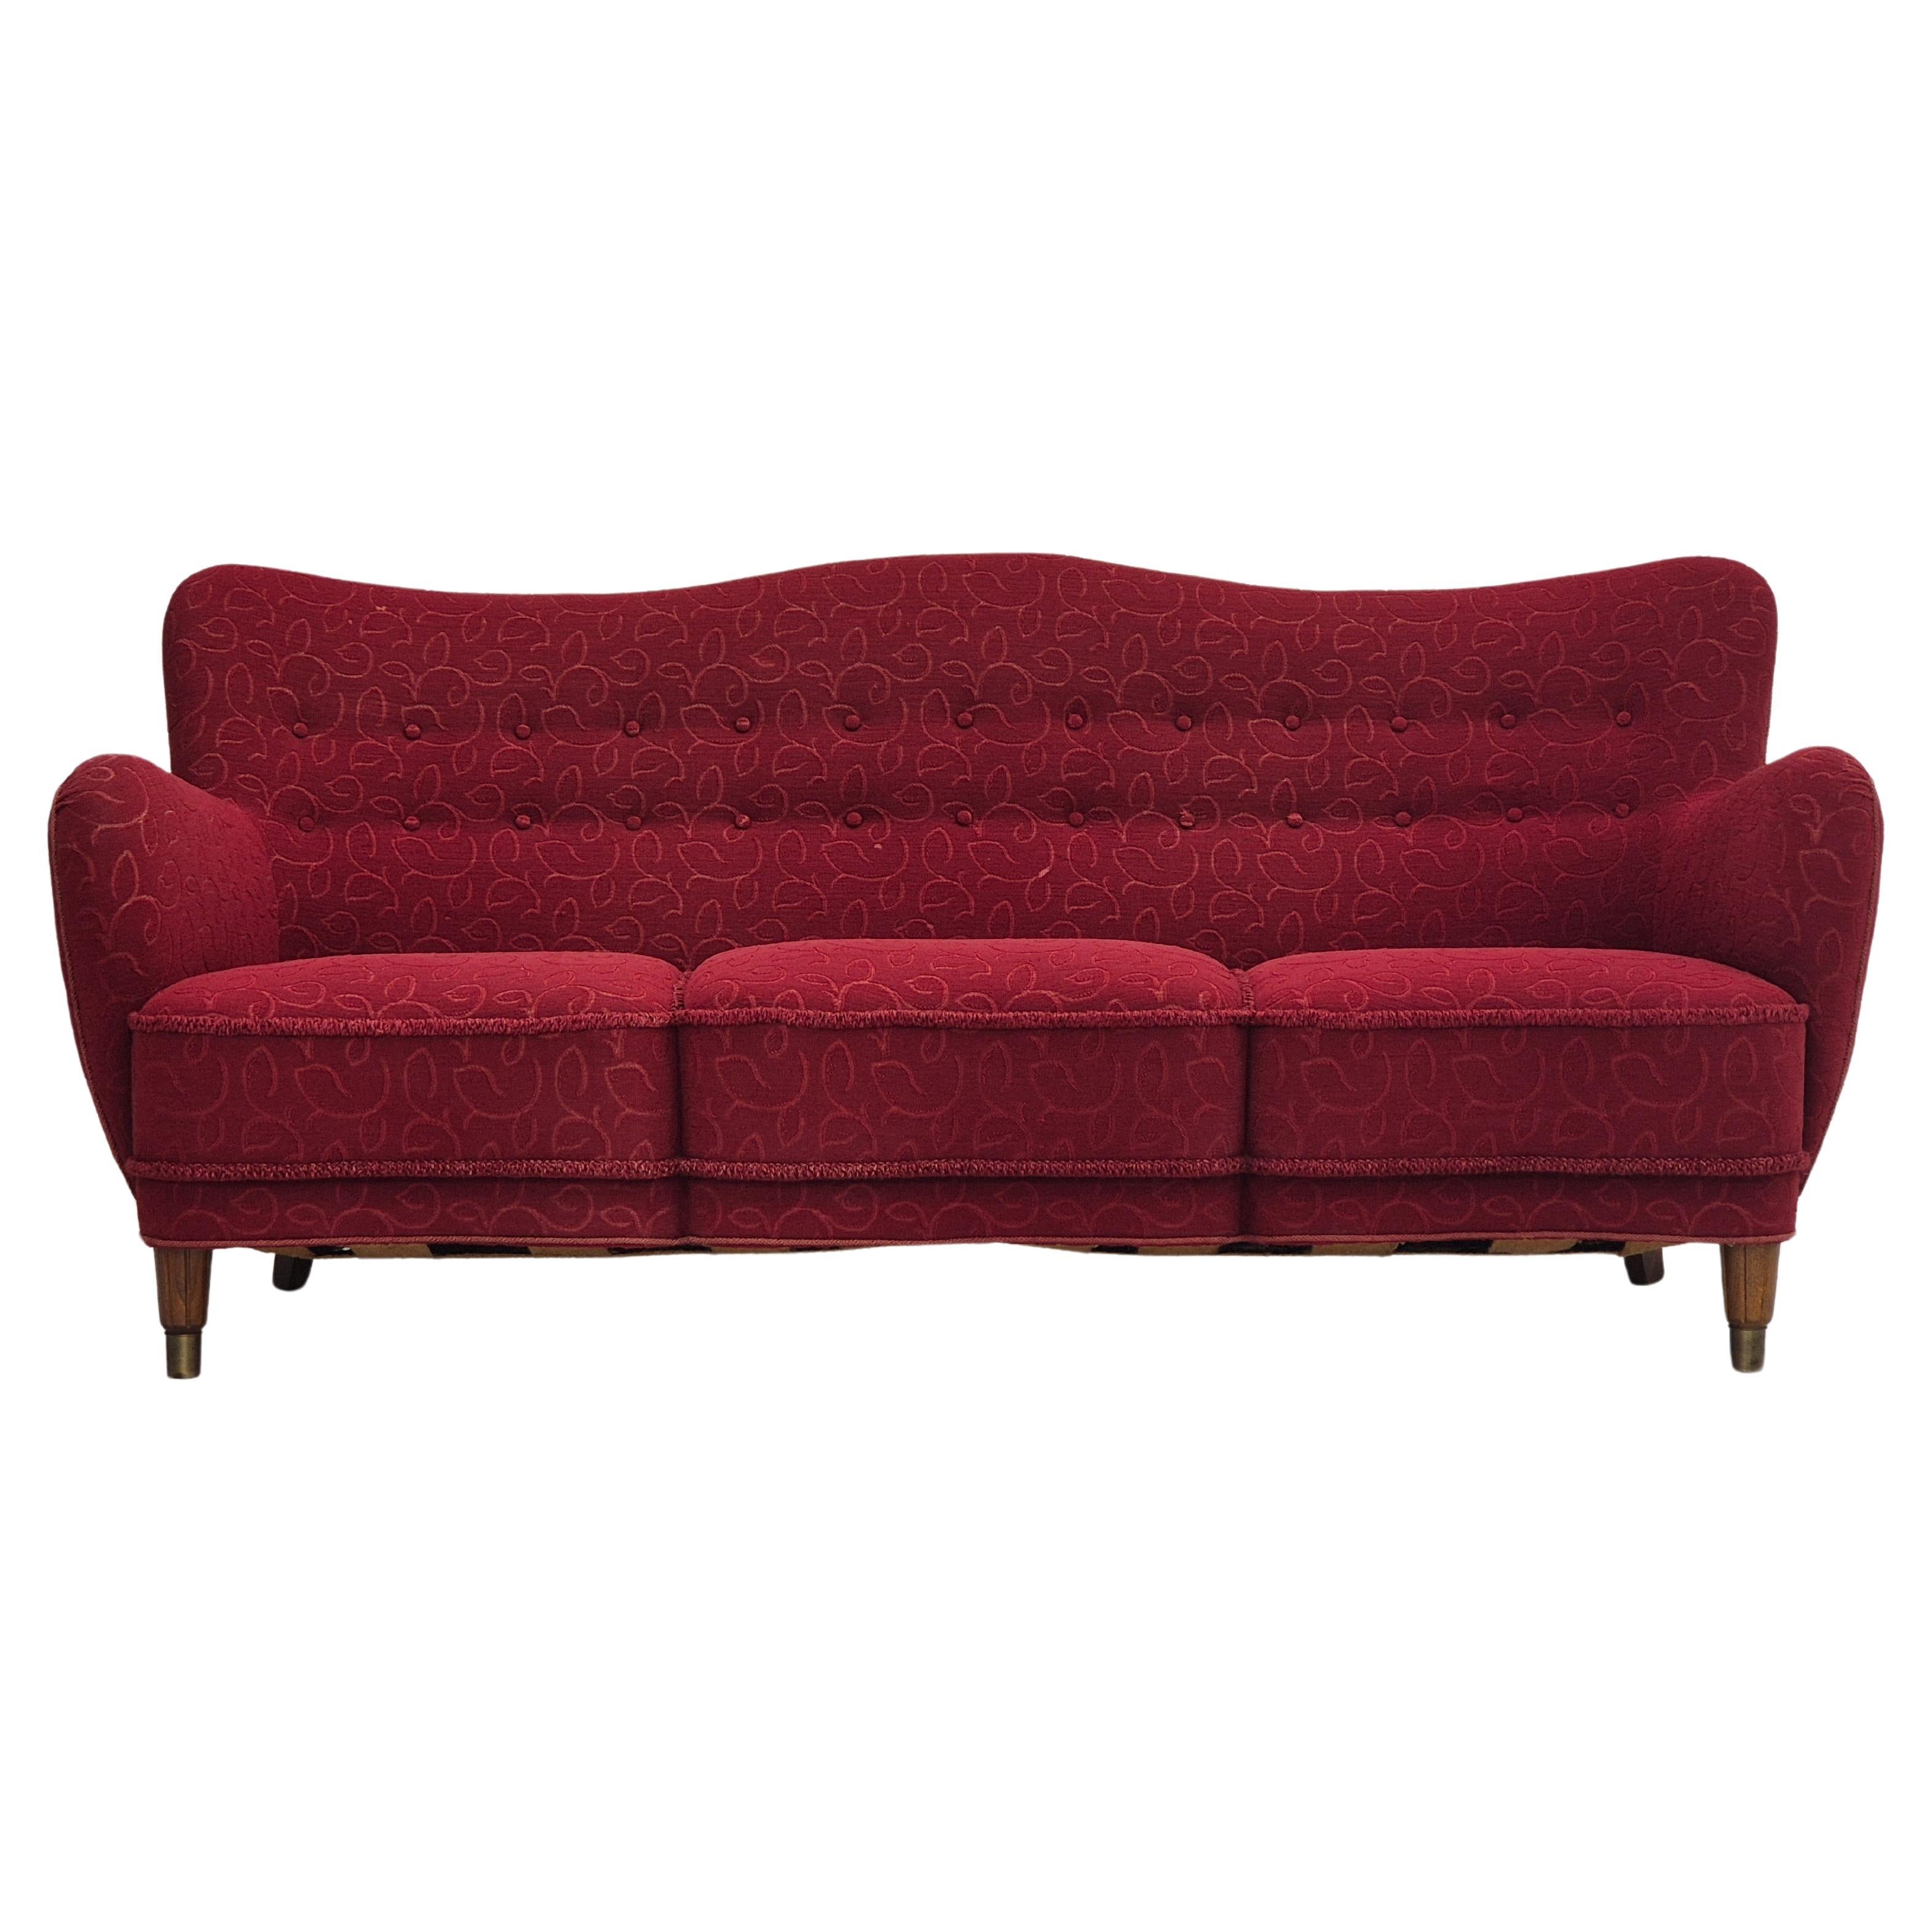 1960s, Danish 3 seater sofa, original condition, cotton-wool fabric. For Sale